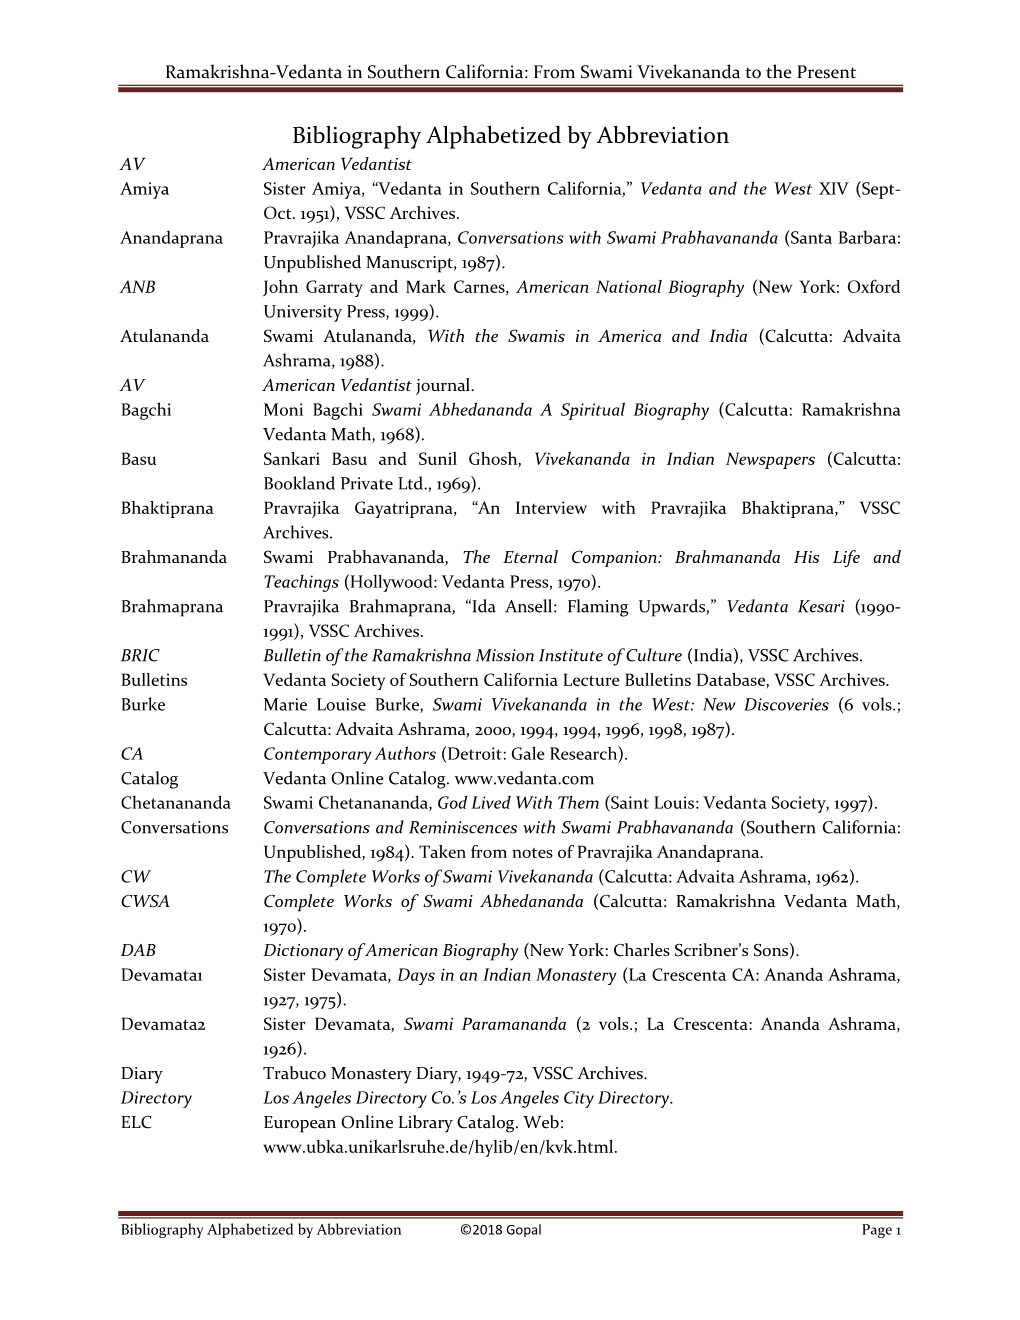 Bibliography Alphabetized by Abbreviation AV American Vedantist Amiya Sister Amiya, “Vedanta in Southern California,” Vedanta and the West XIV (Sept- Oct